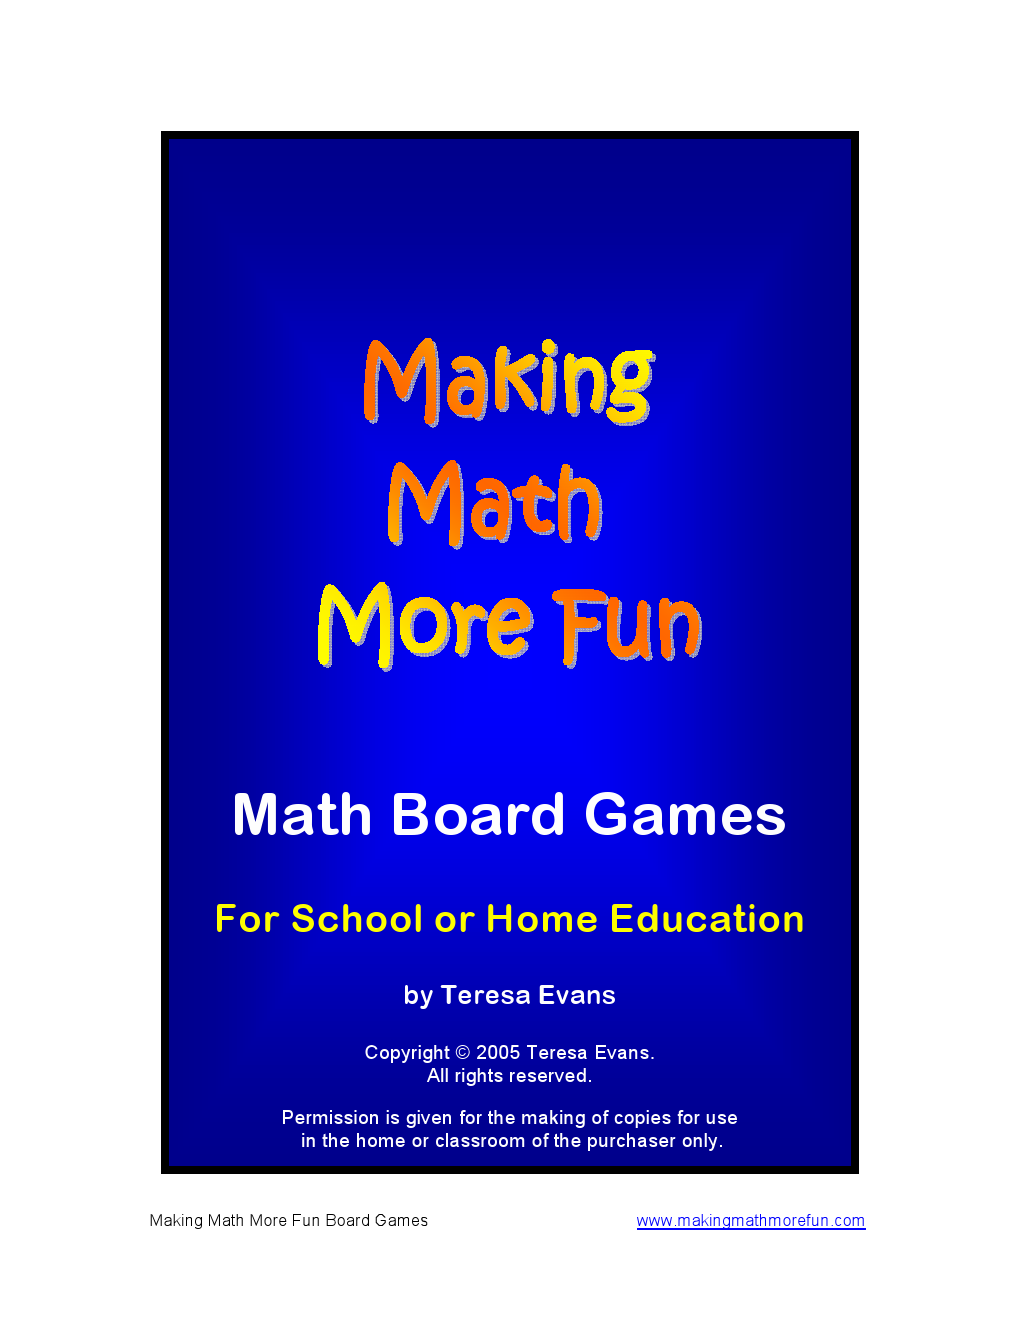 Making Math More Fun Math Board Games for Kids